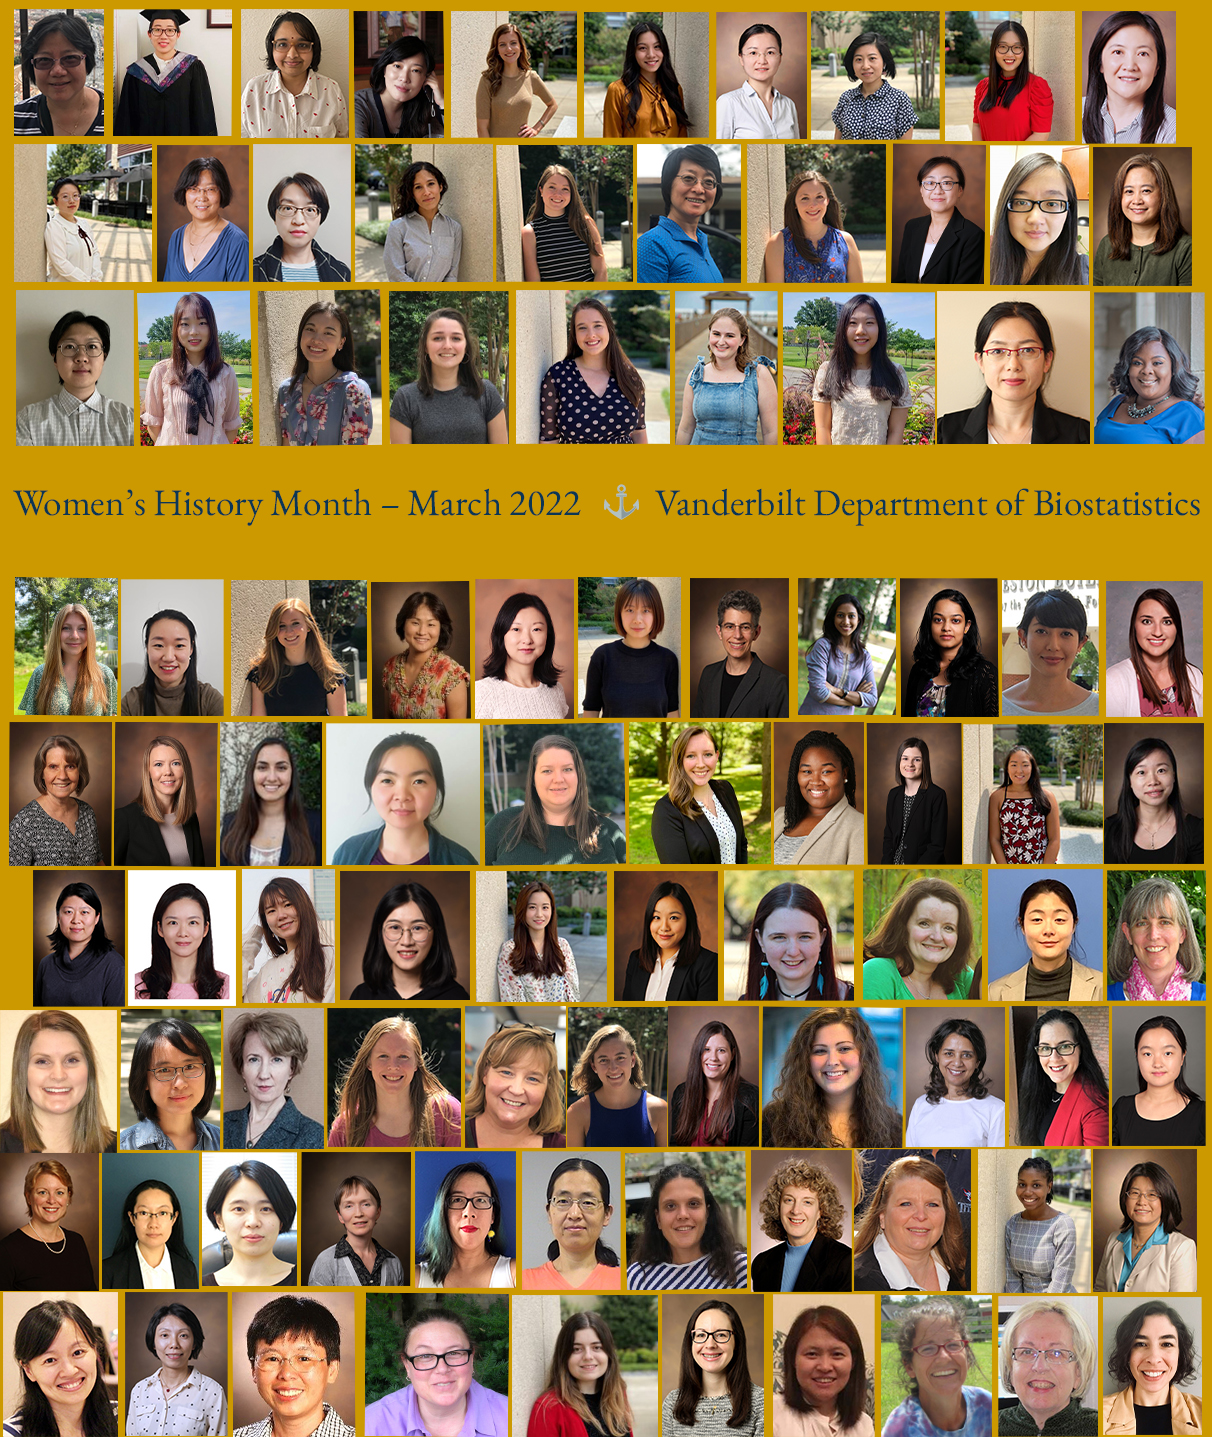 Gallery of Vanderbilt Biostatistics women